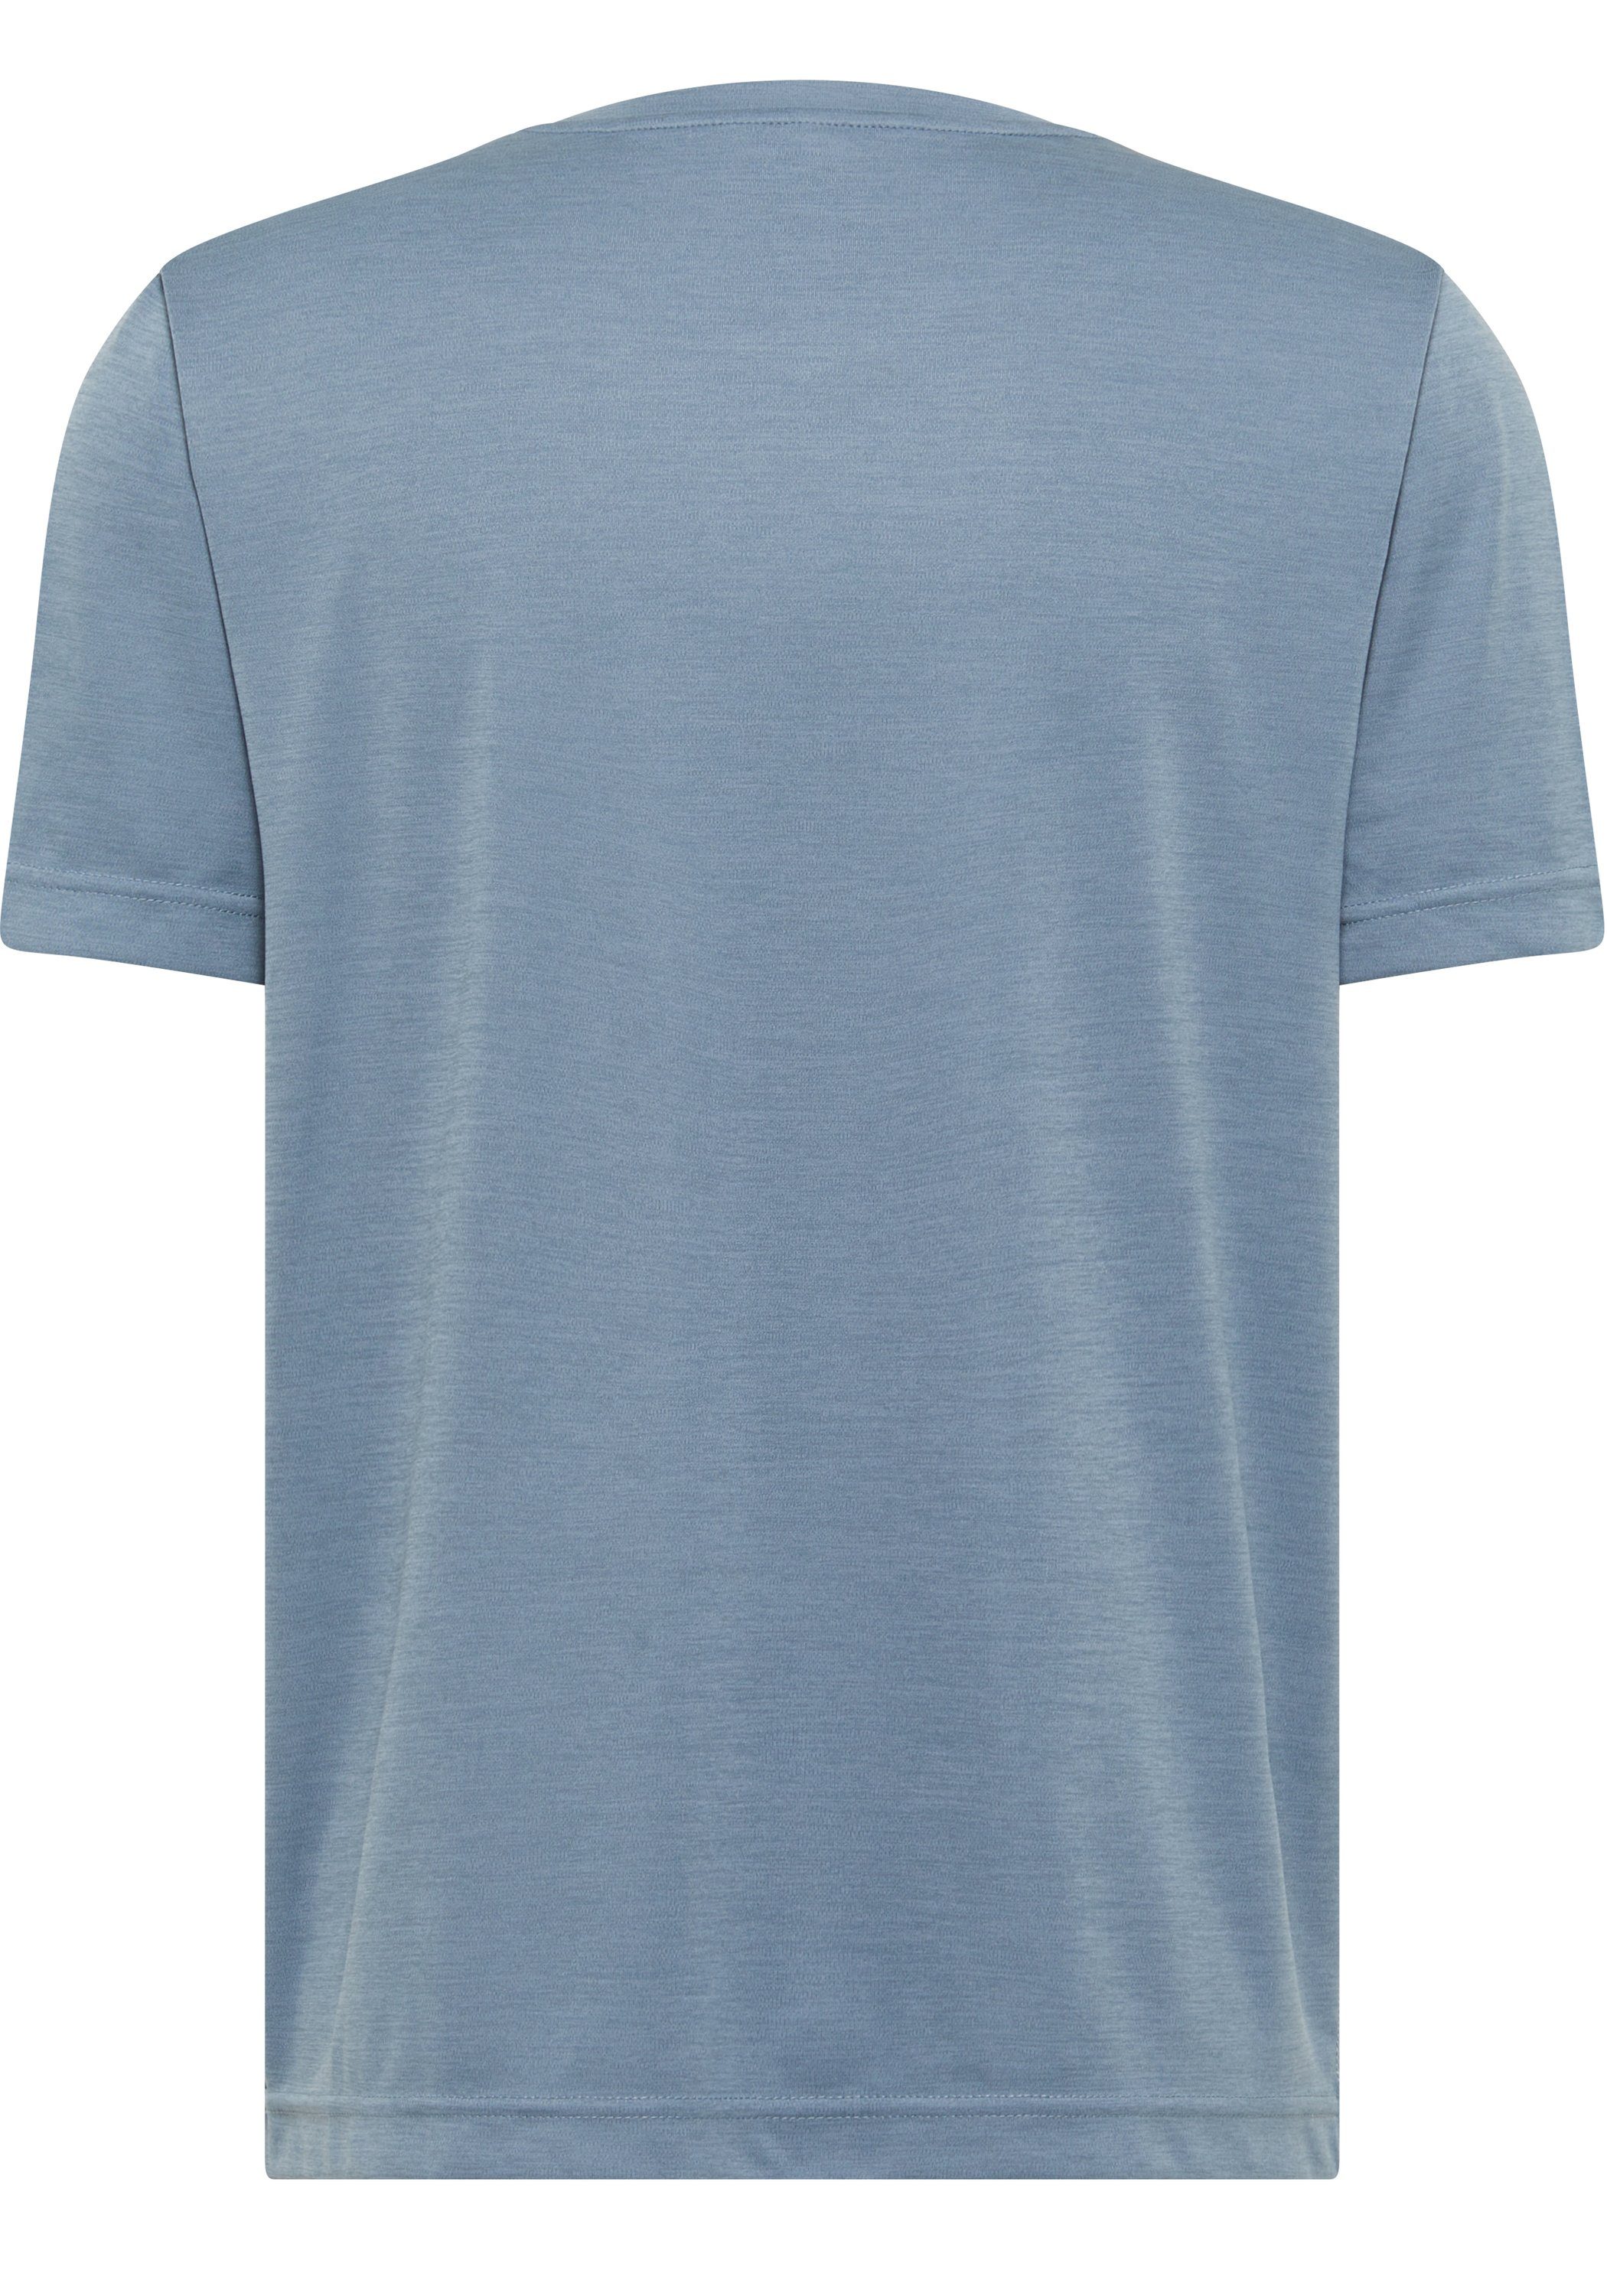 dusk T-Shirt T-Shirt Joy Sportswear ANDRE blue melange